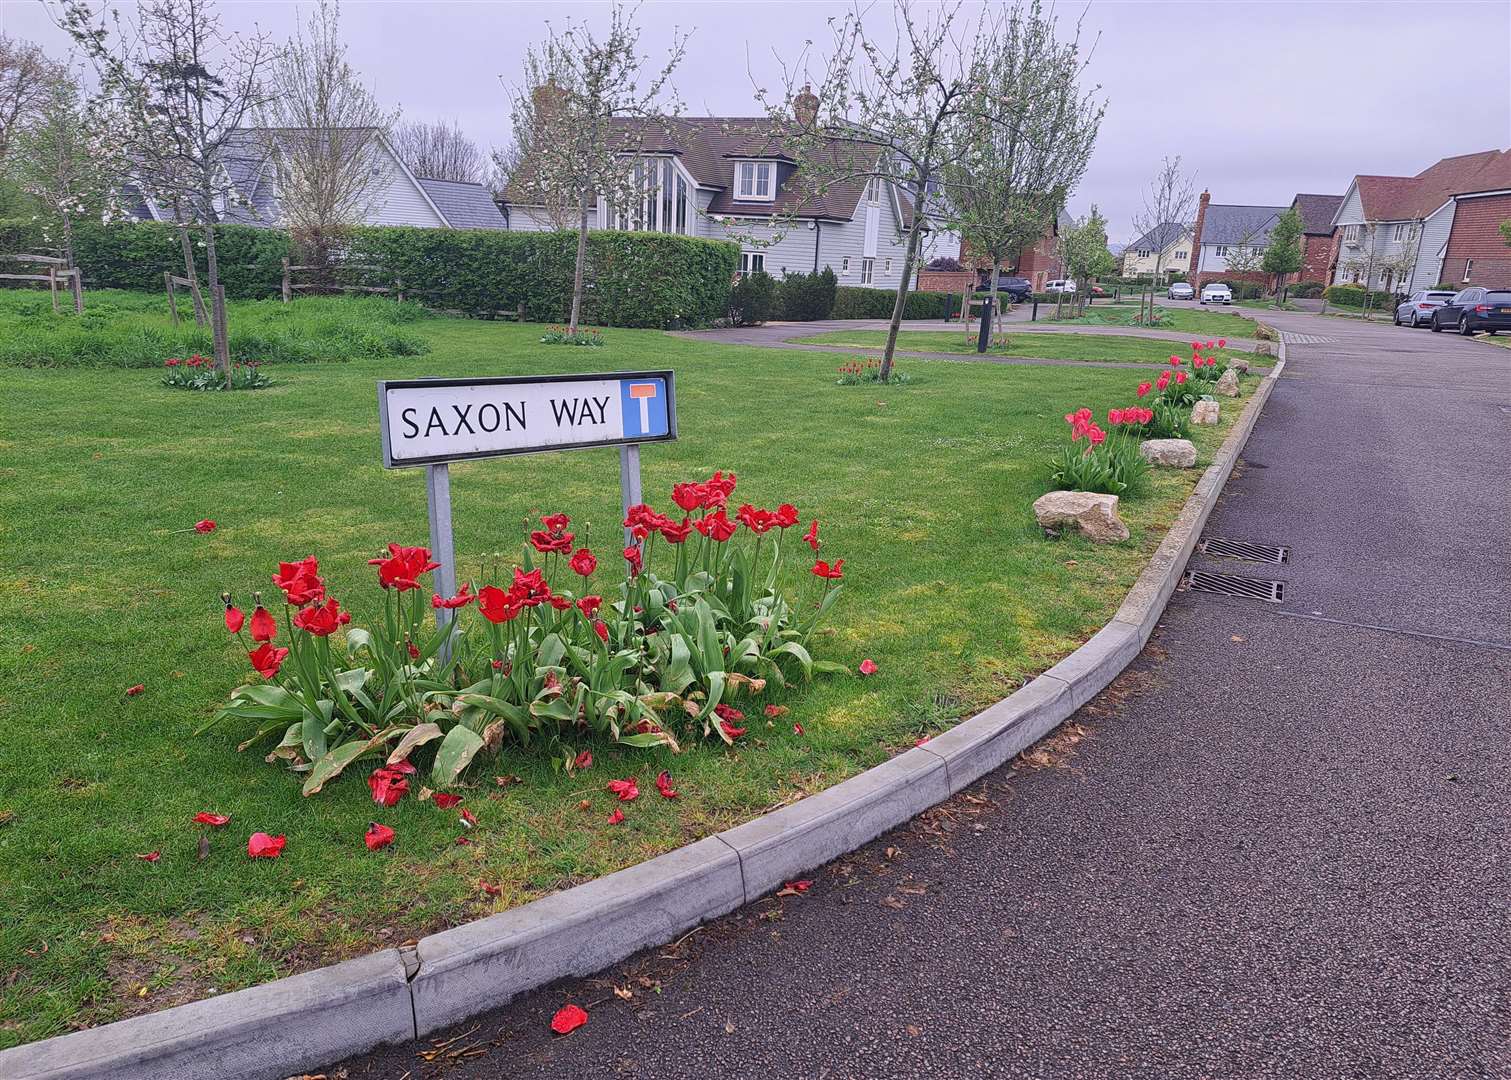 Saxon Way - Tovil or Loose?